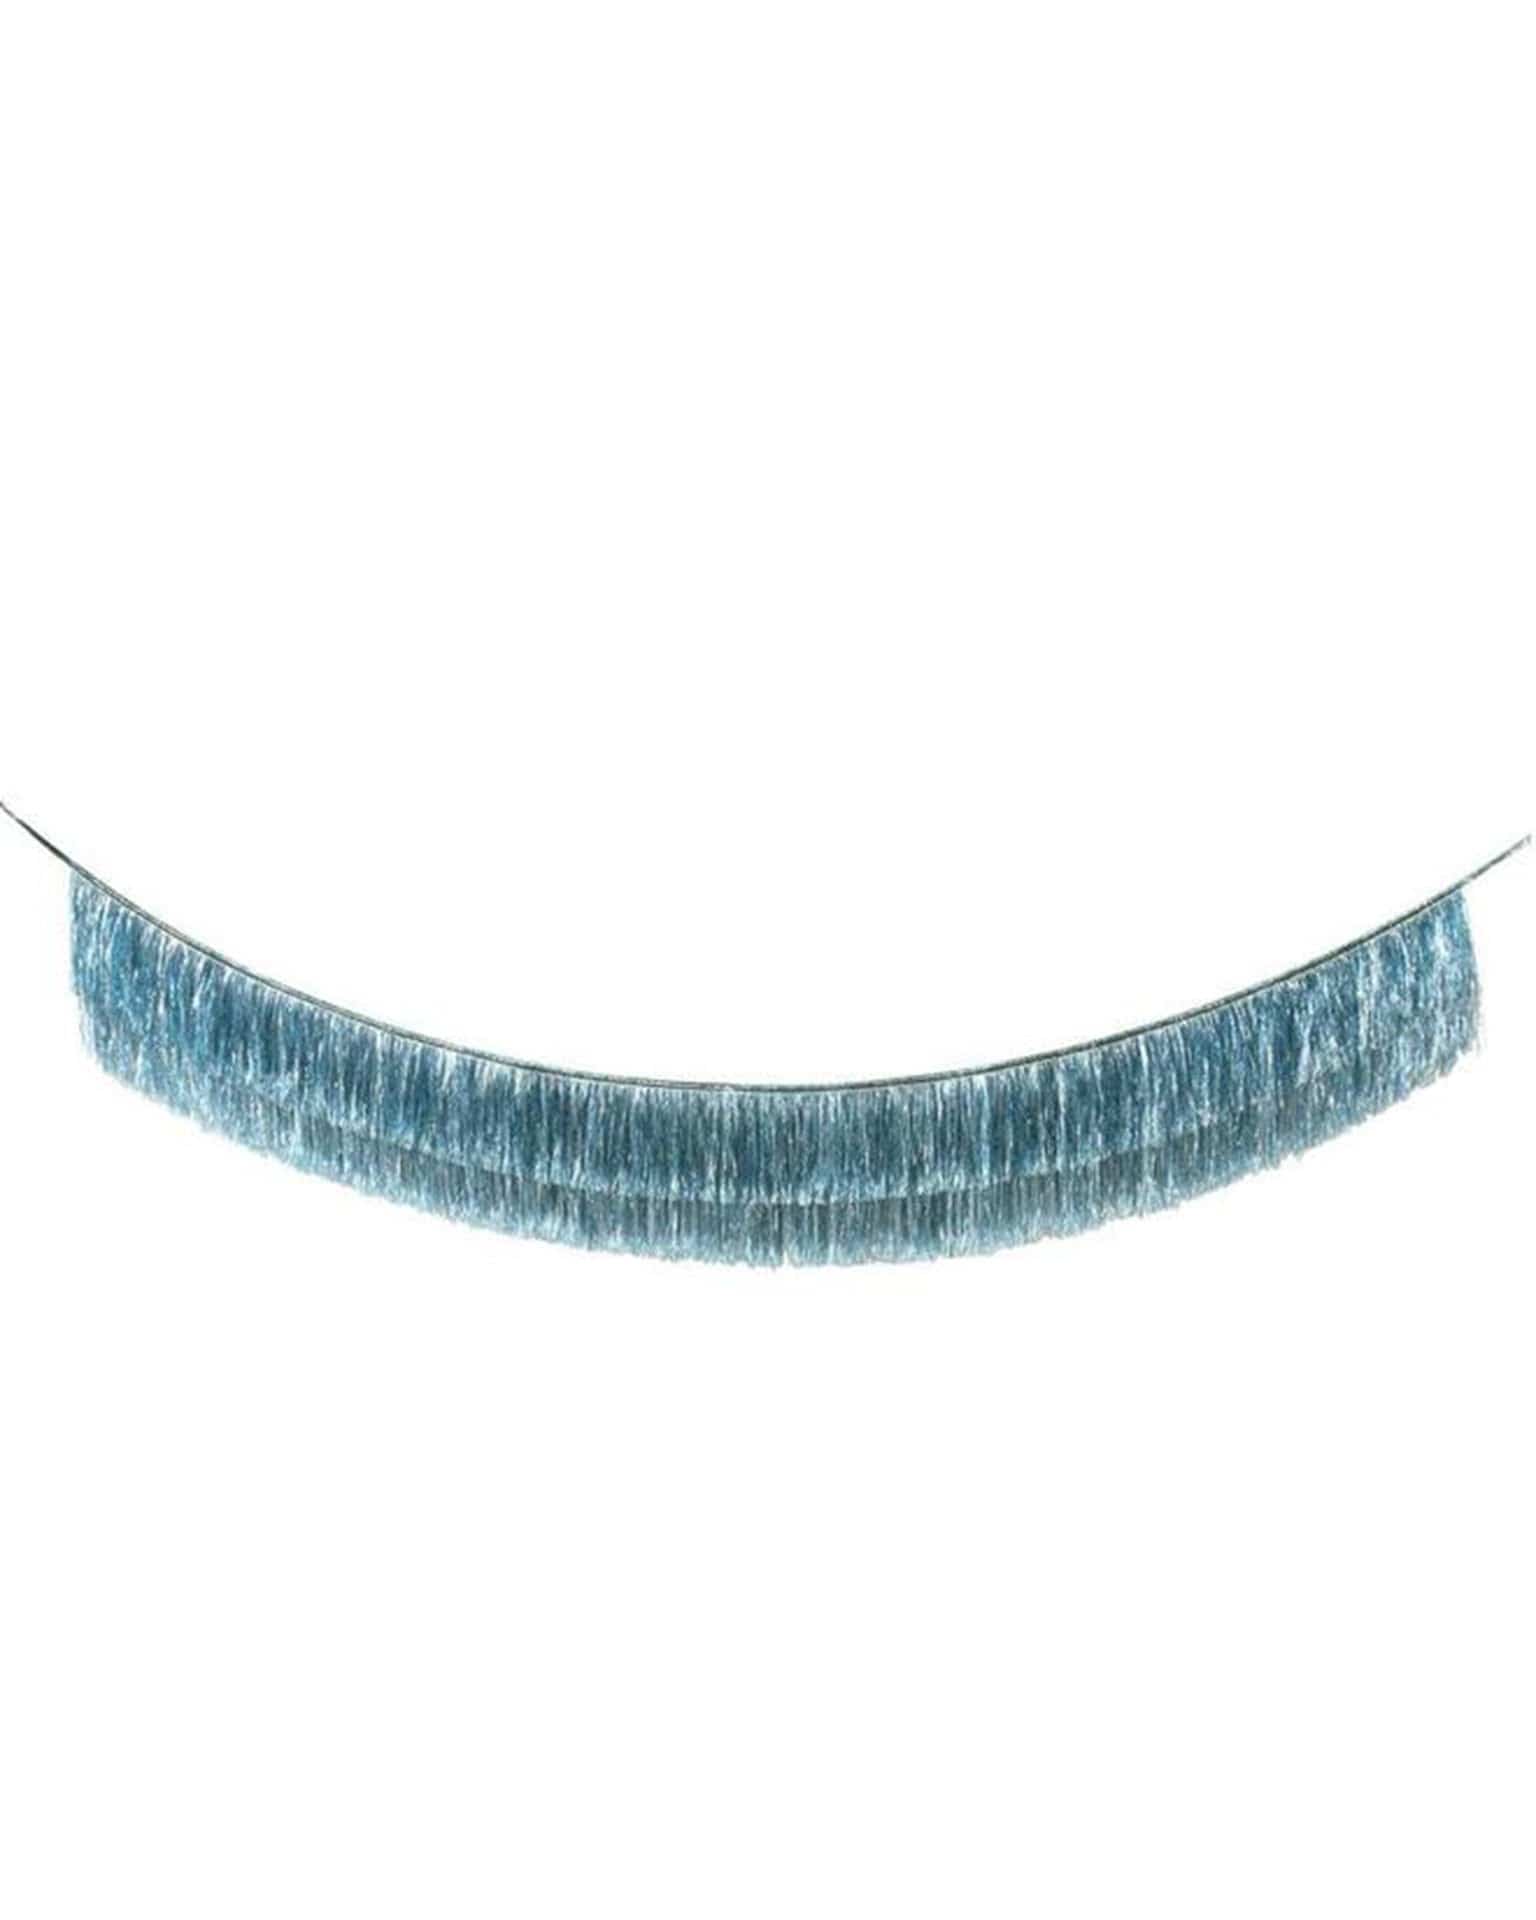 meri meri blue tinsel fringe garland - Little